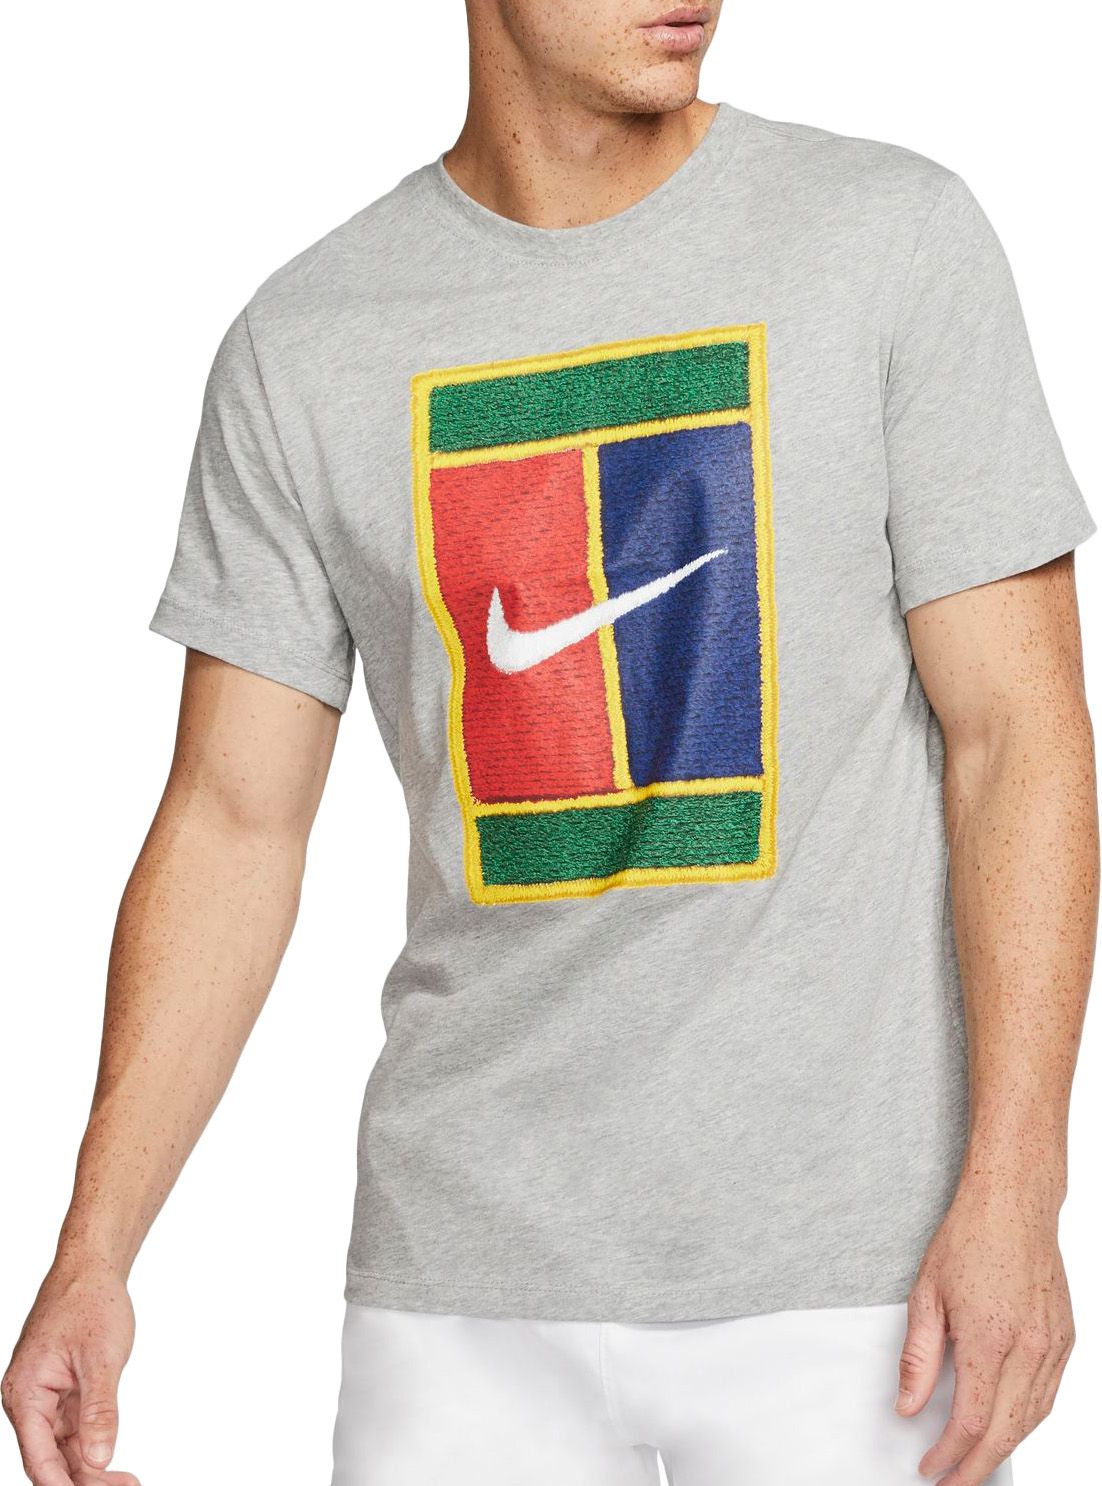 Nike Men's NikeCourt Graphic Tennis T-Shirt | DICK'S Sporting Goods